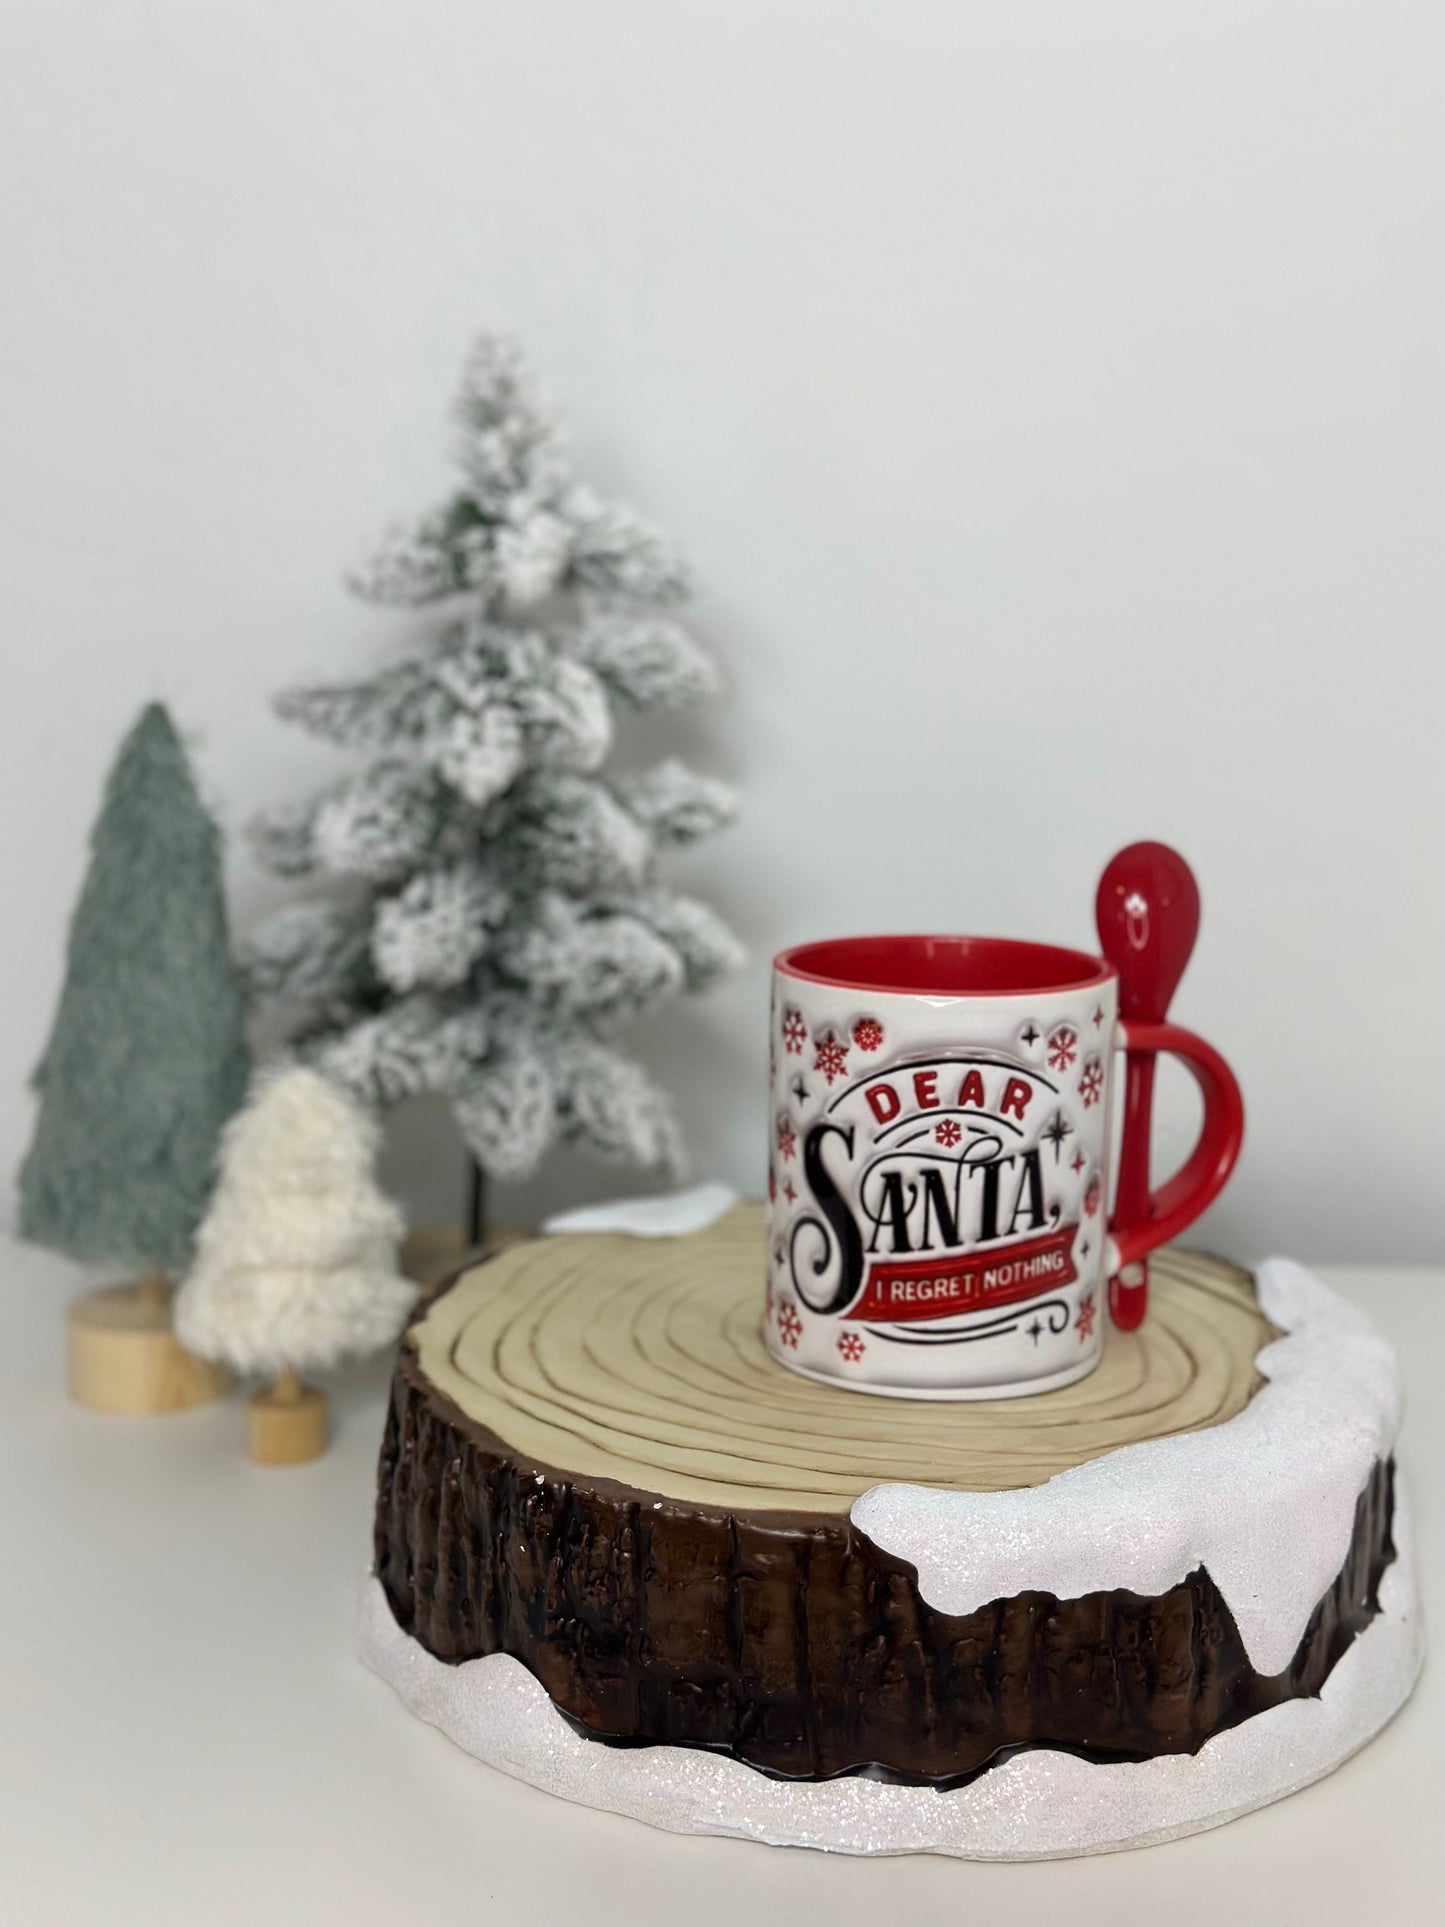 Santa I regret Nothing Ceramic Christmas Mug with spoon